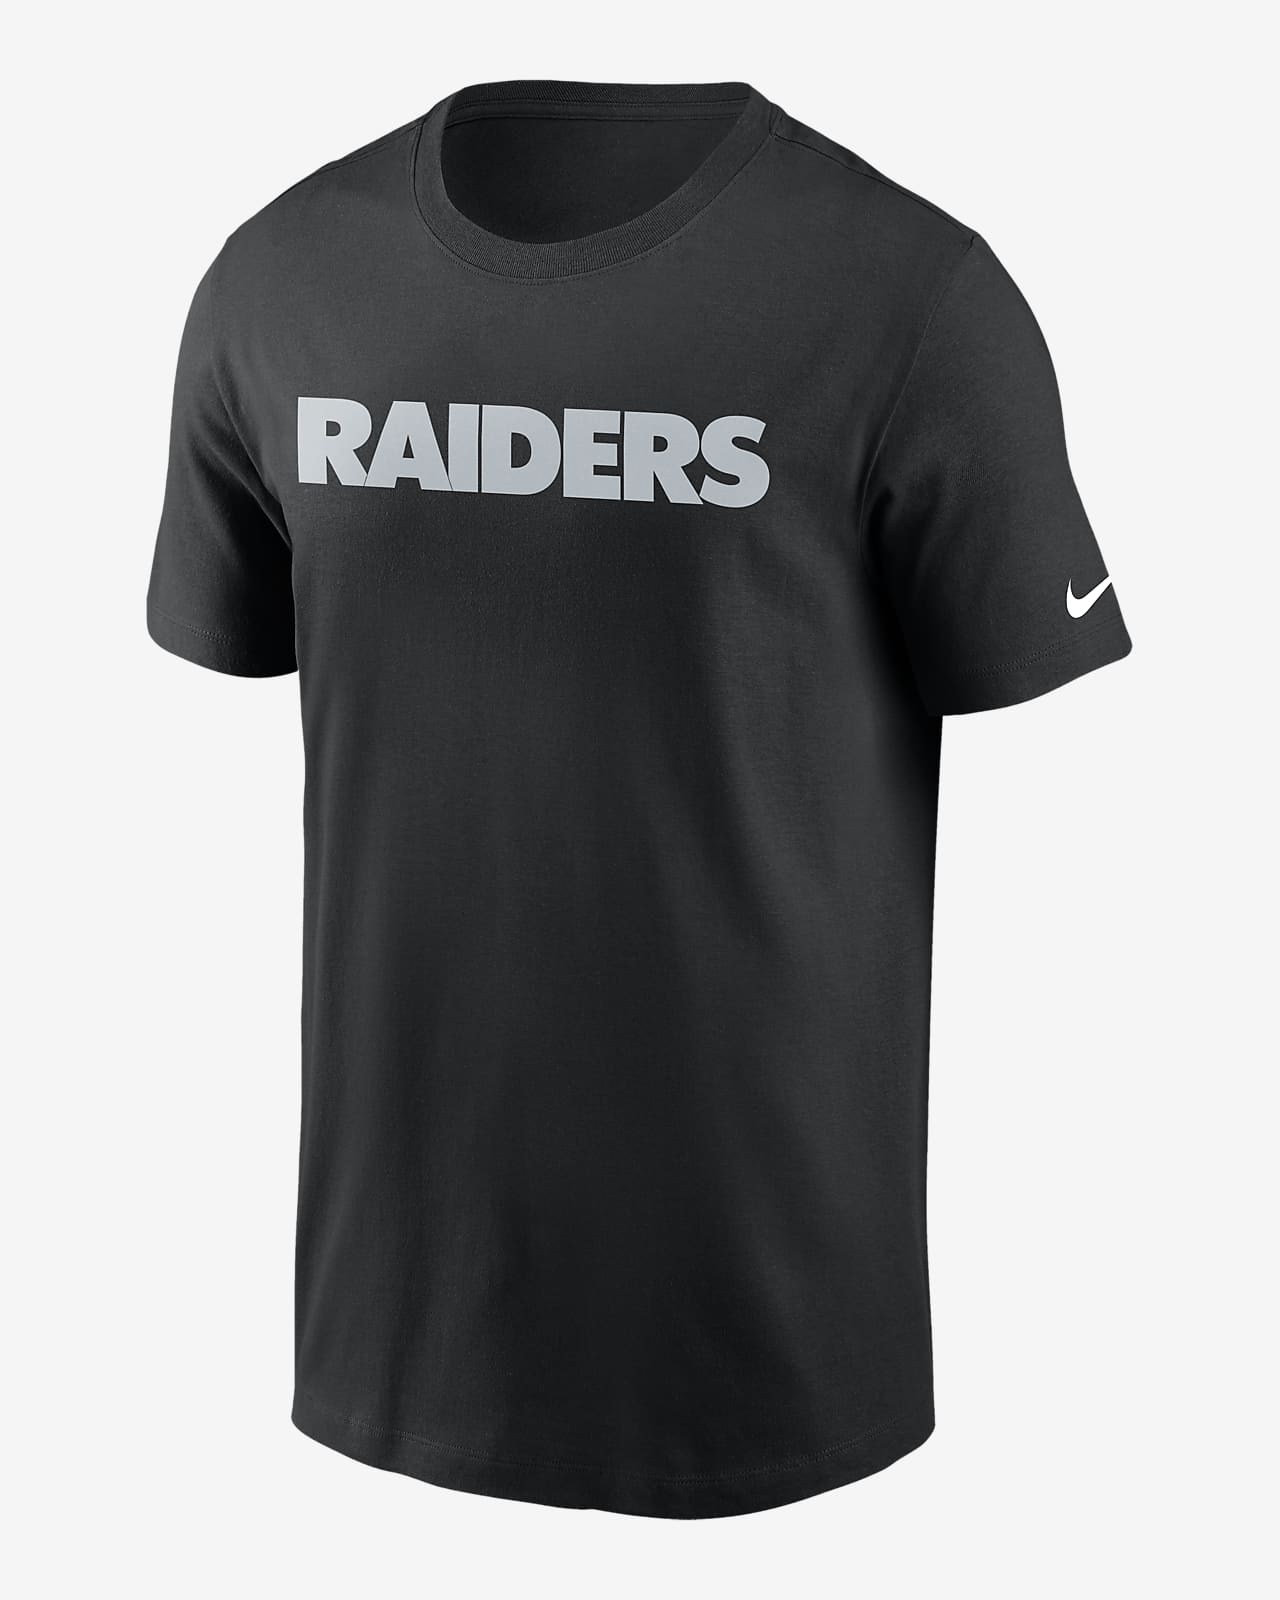 nike raiders shirt